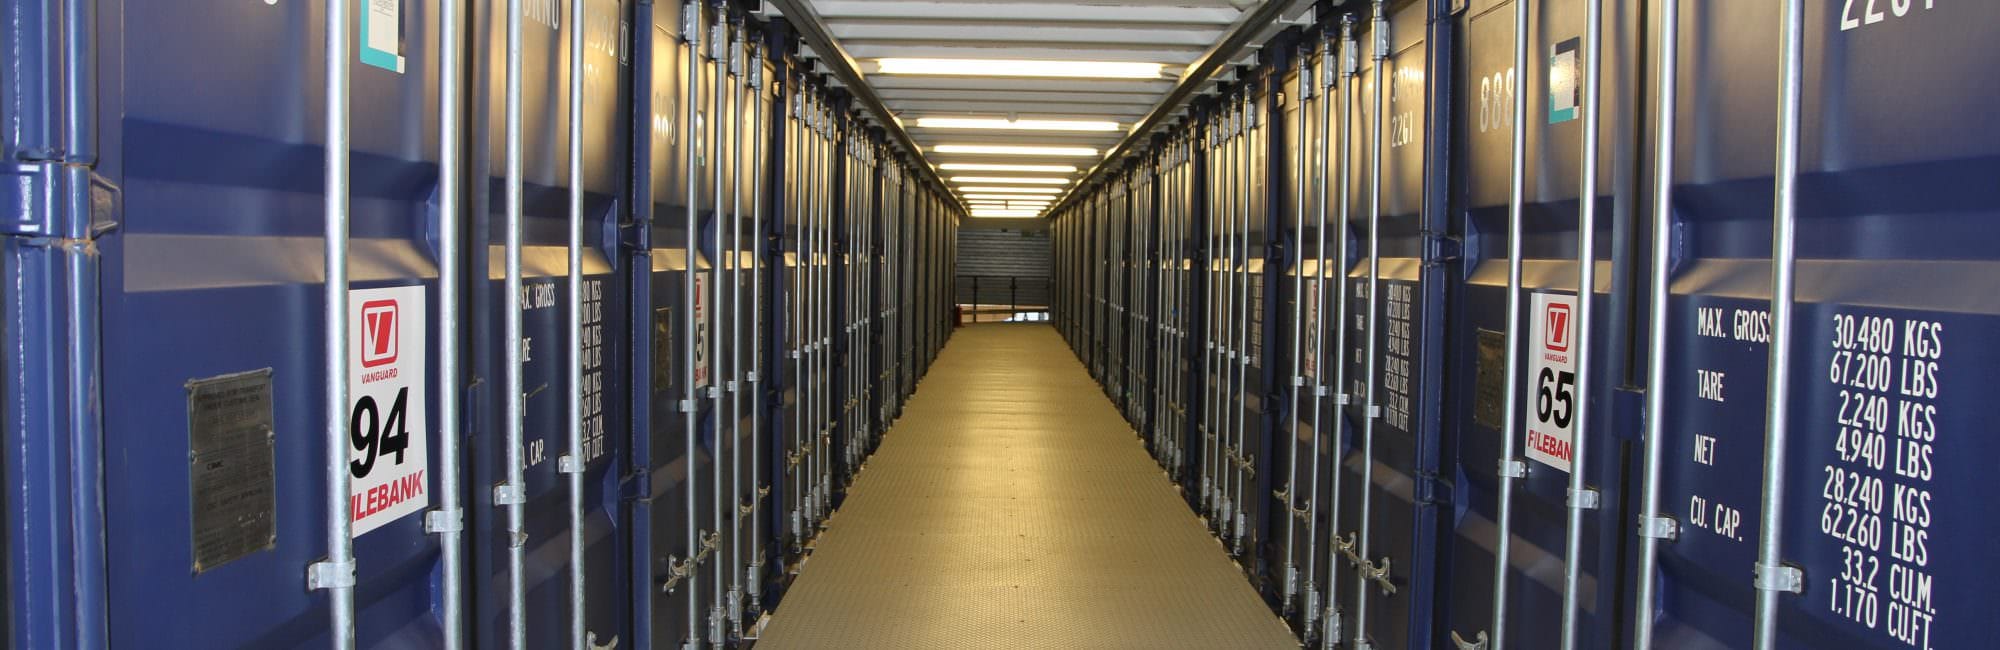 Vanguard Self Storage - London, UK, self storage